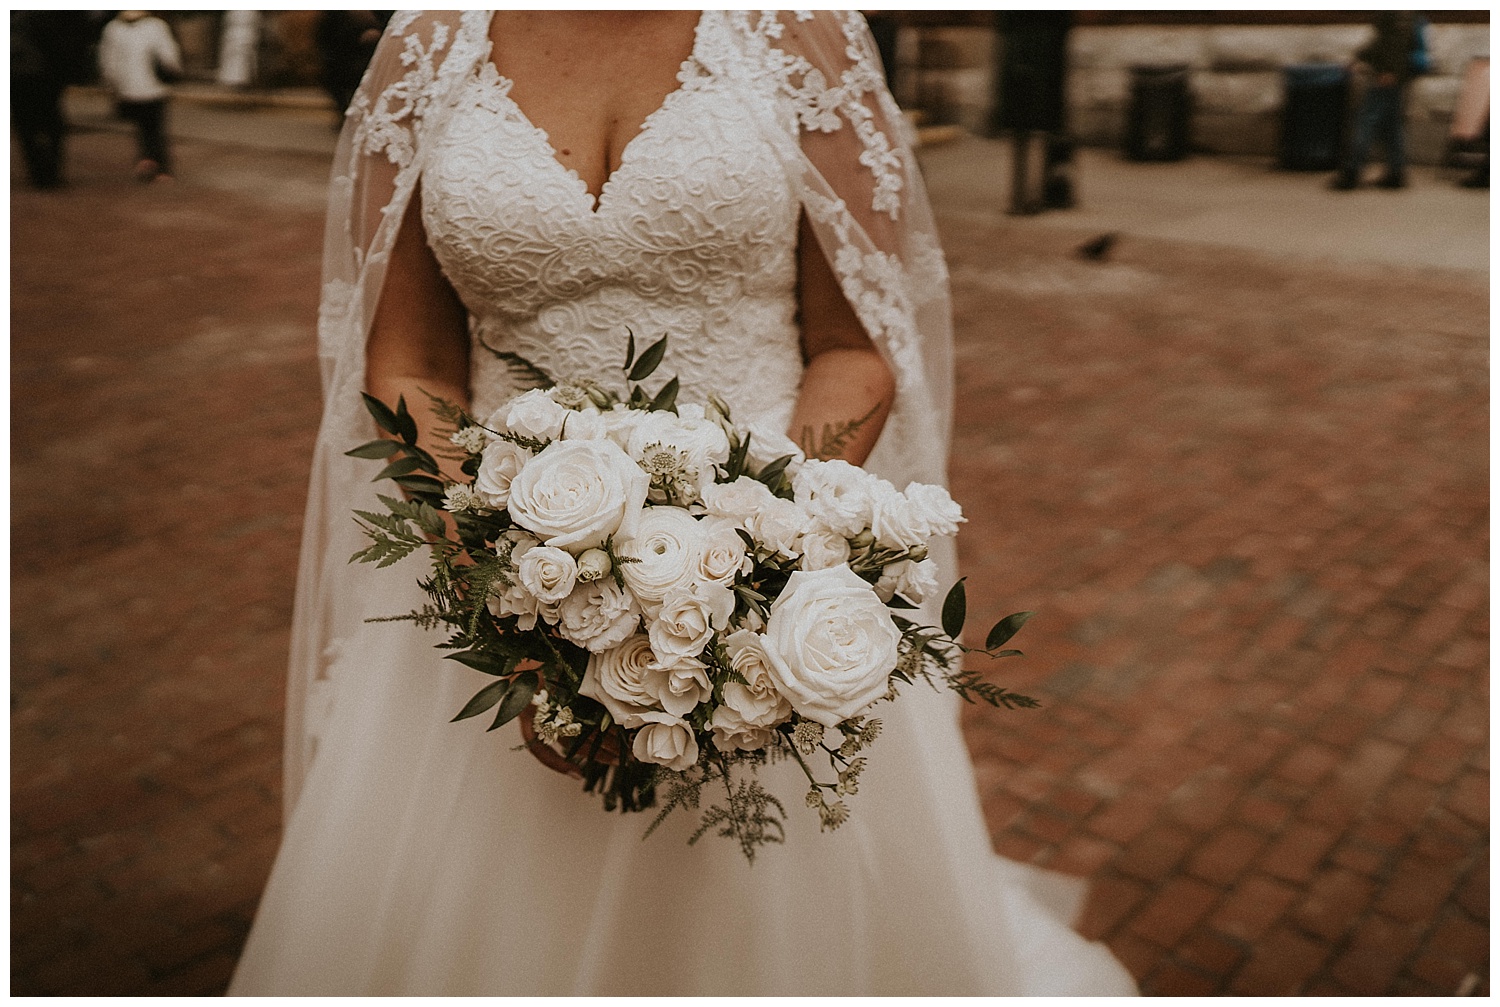 Katie Marie Photography | Archeo Wedding Arta Gallery Wedding | Distillery District Wedding | Toronto Wedding Photographer | Hamilton Toronto Ontario Wedding Photographer |_0021.jpg